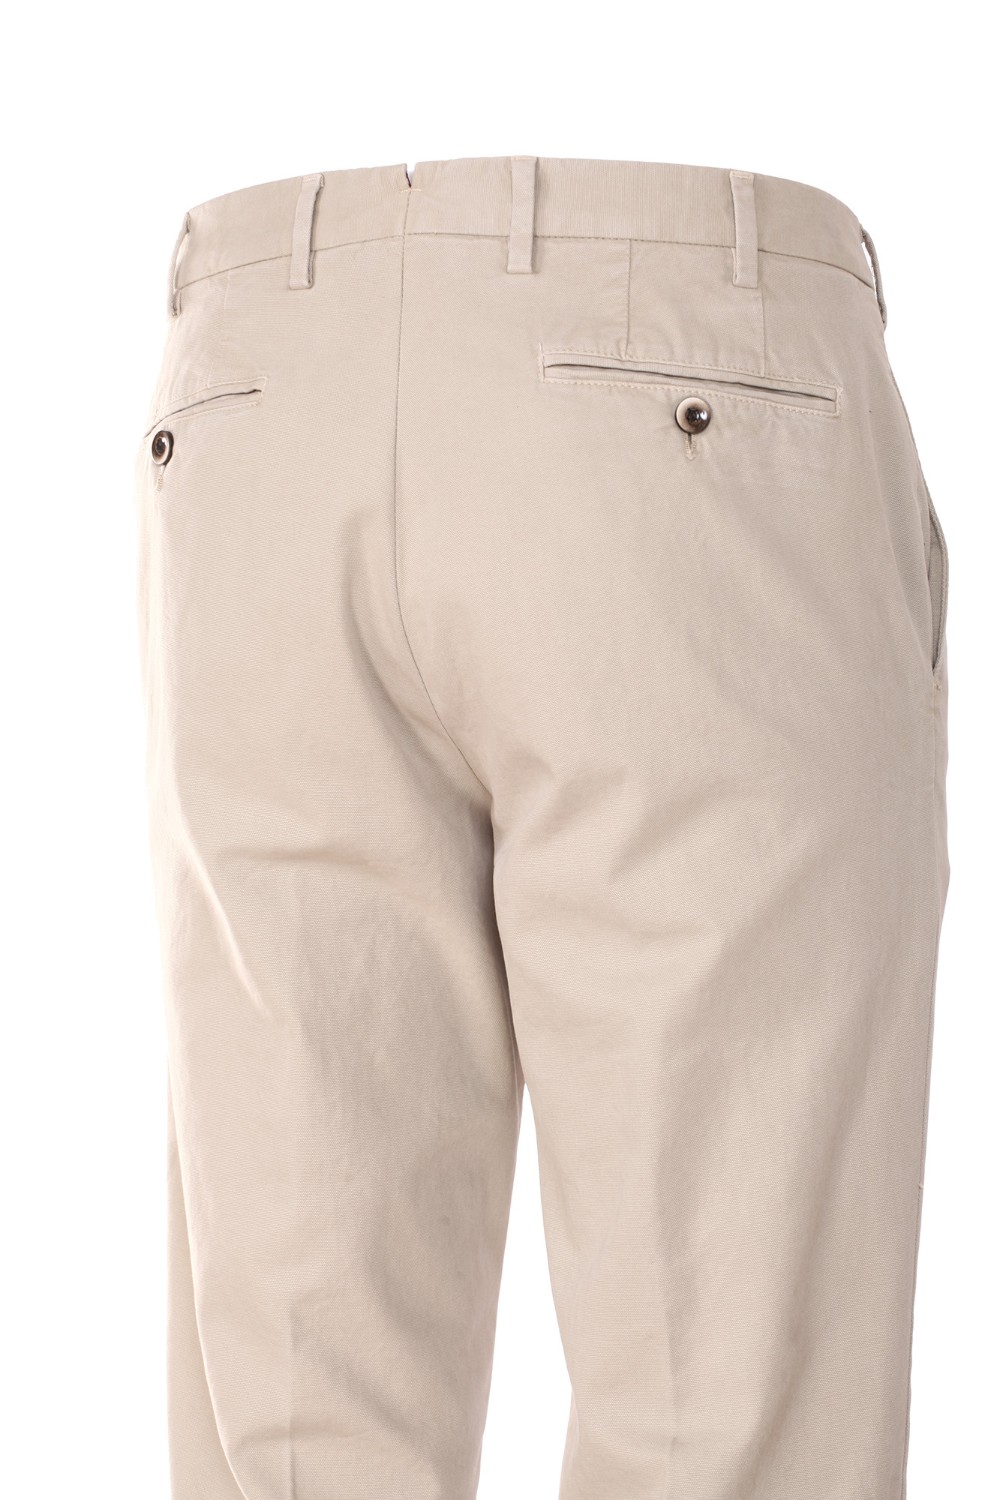 shop GERMANO Saldi Pantalone: Germano pantalone in cotone.
Drop 6.
Chiusura con zip e bottone sovrapposto.
Regular fit.
Composizione: 97% cotone 3% elastan.
Made in Italy.. 524 59J2-440 number 3573470